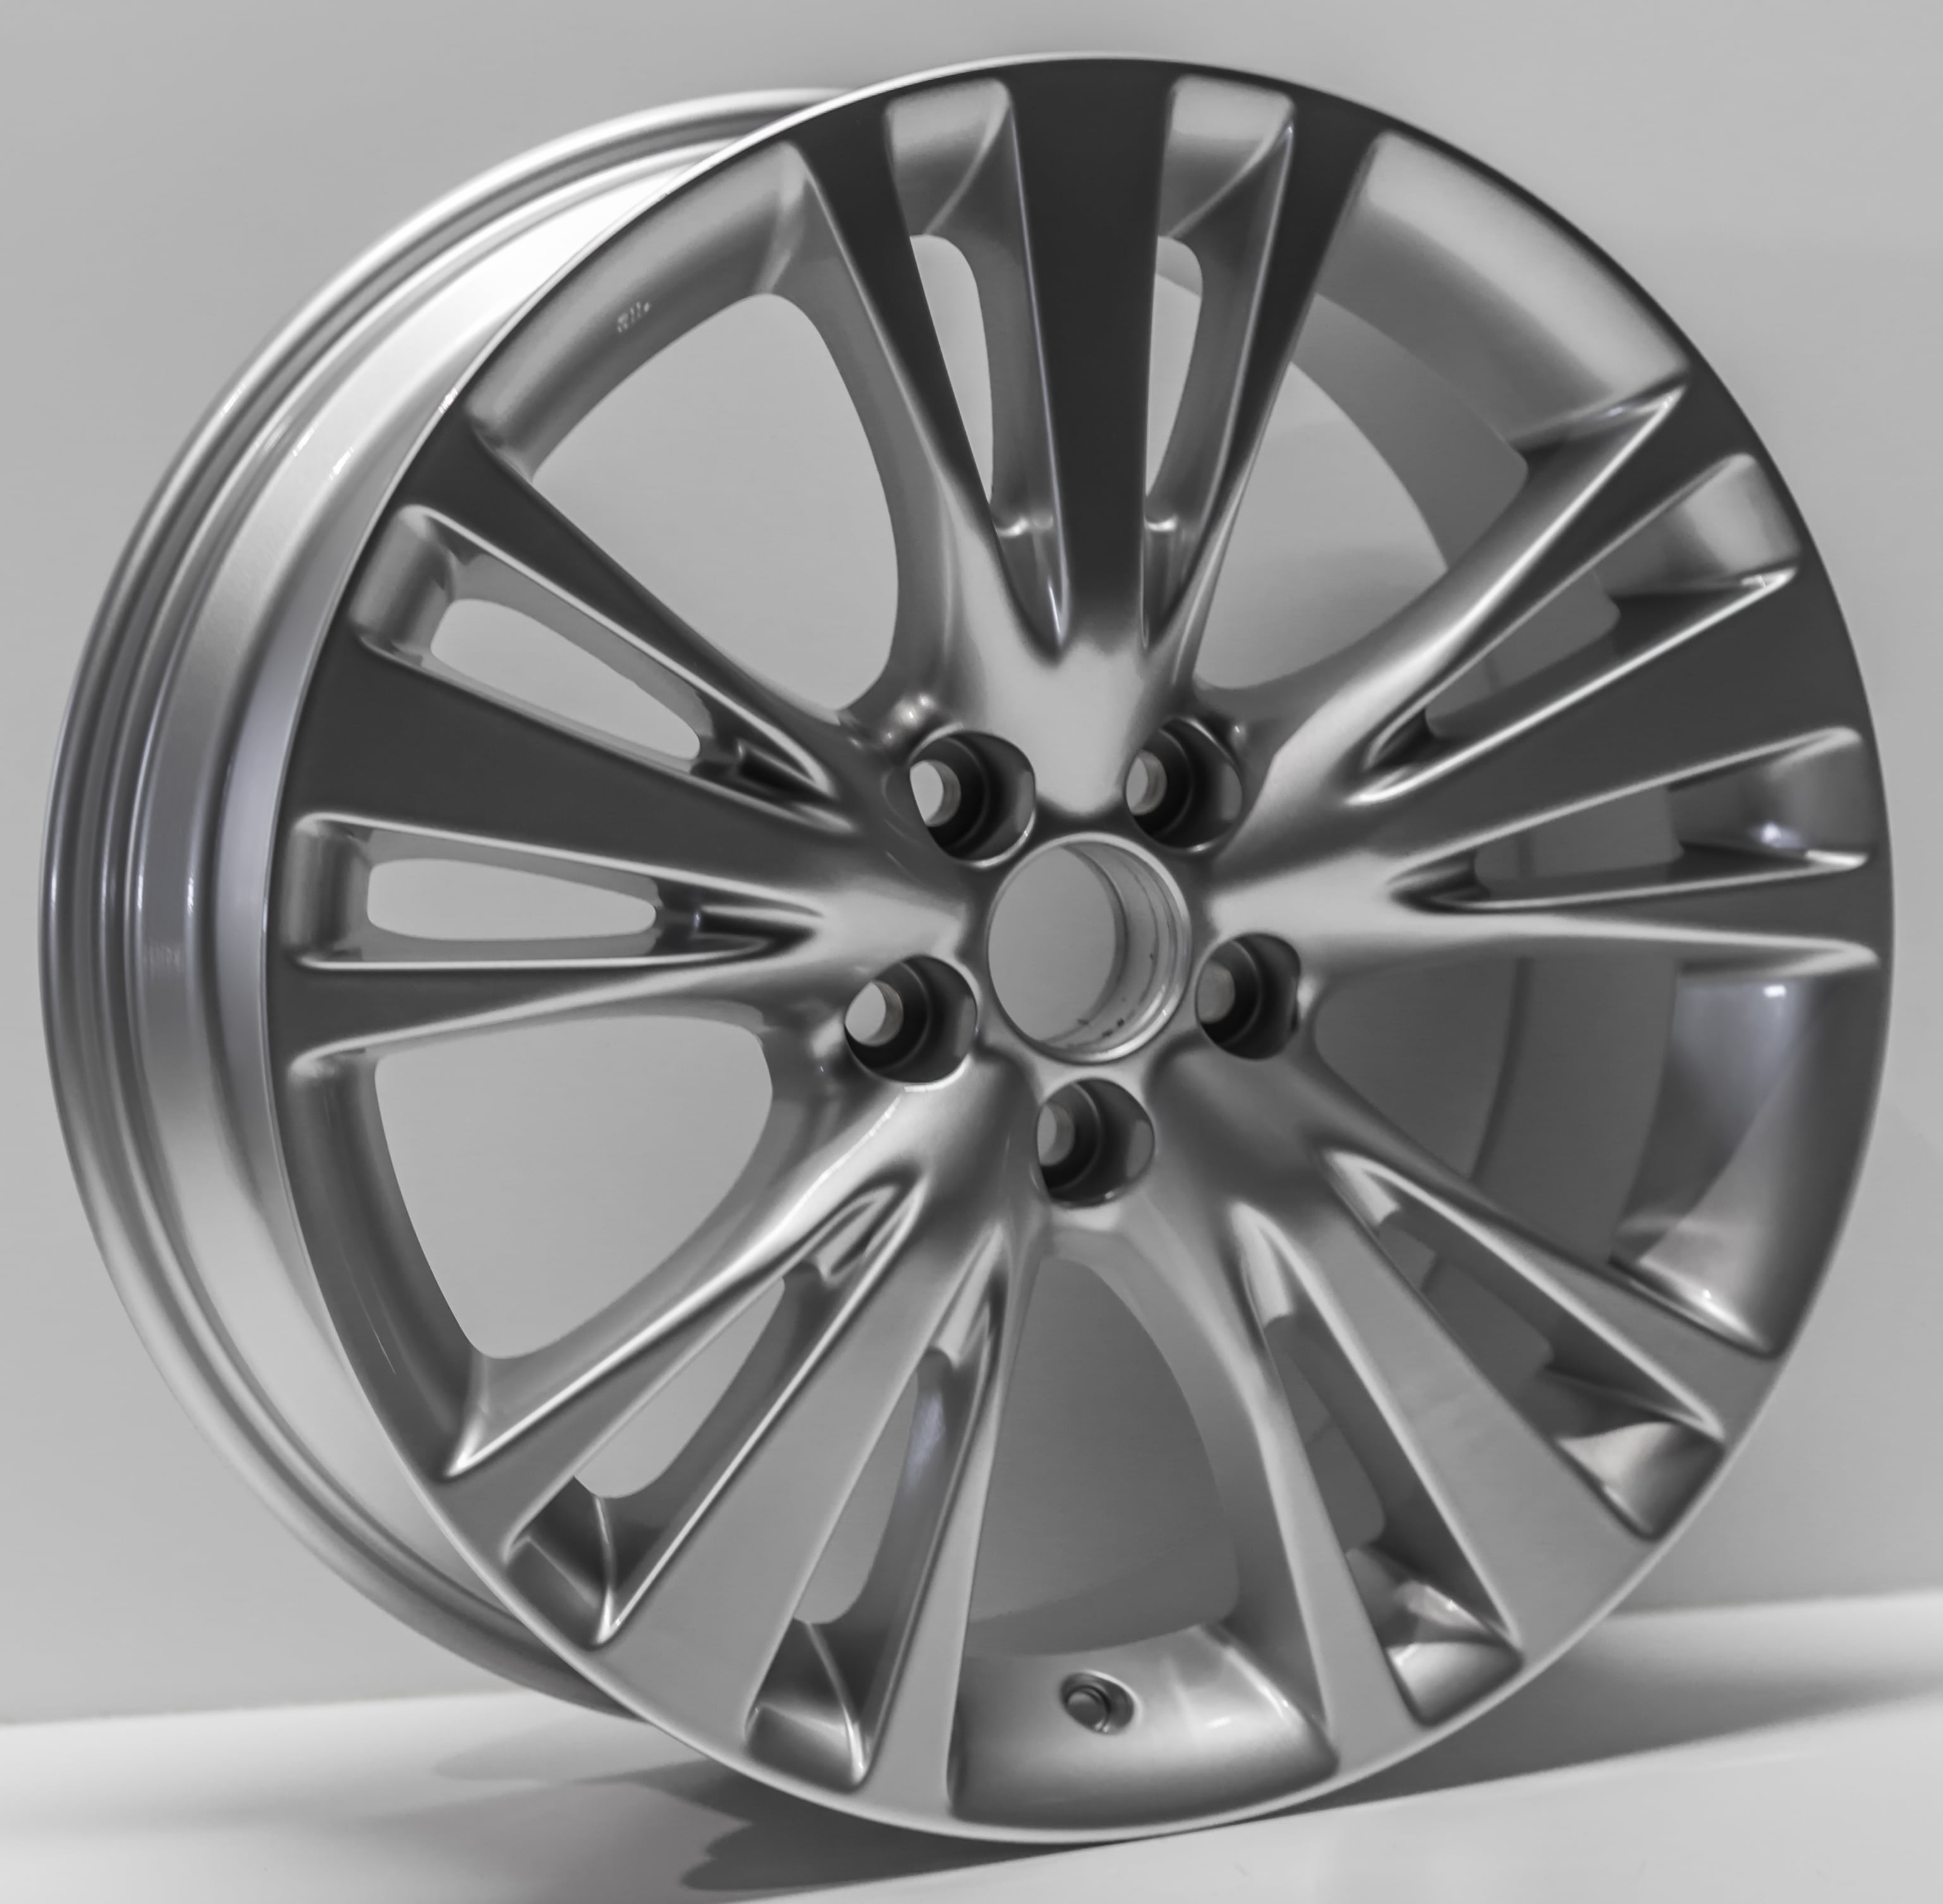 Replacement Aftermarket Alloy Wheel Rim 16x6.5 5 Lugs Fits Lexus RX